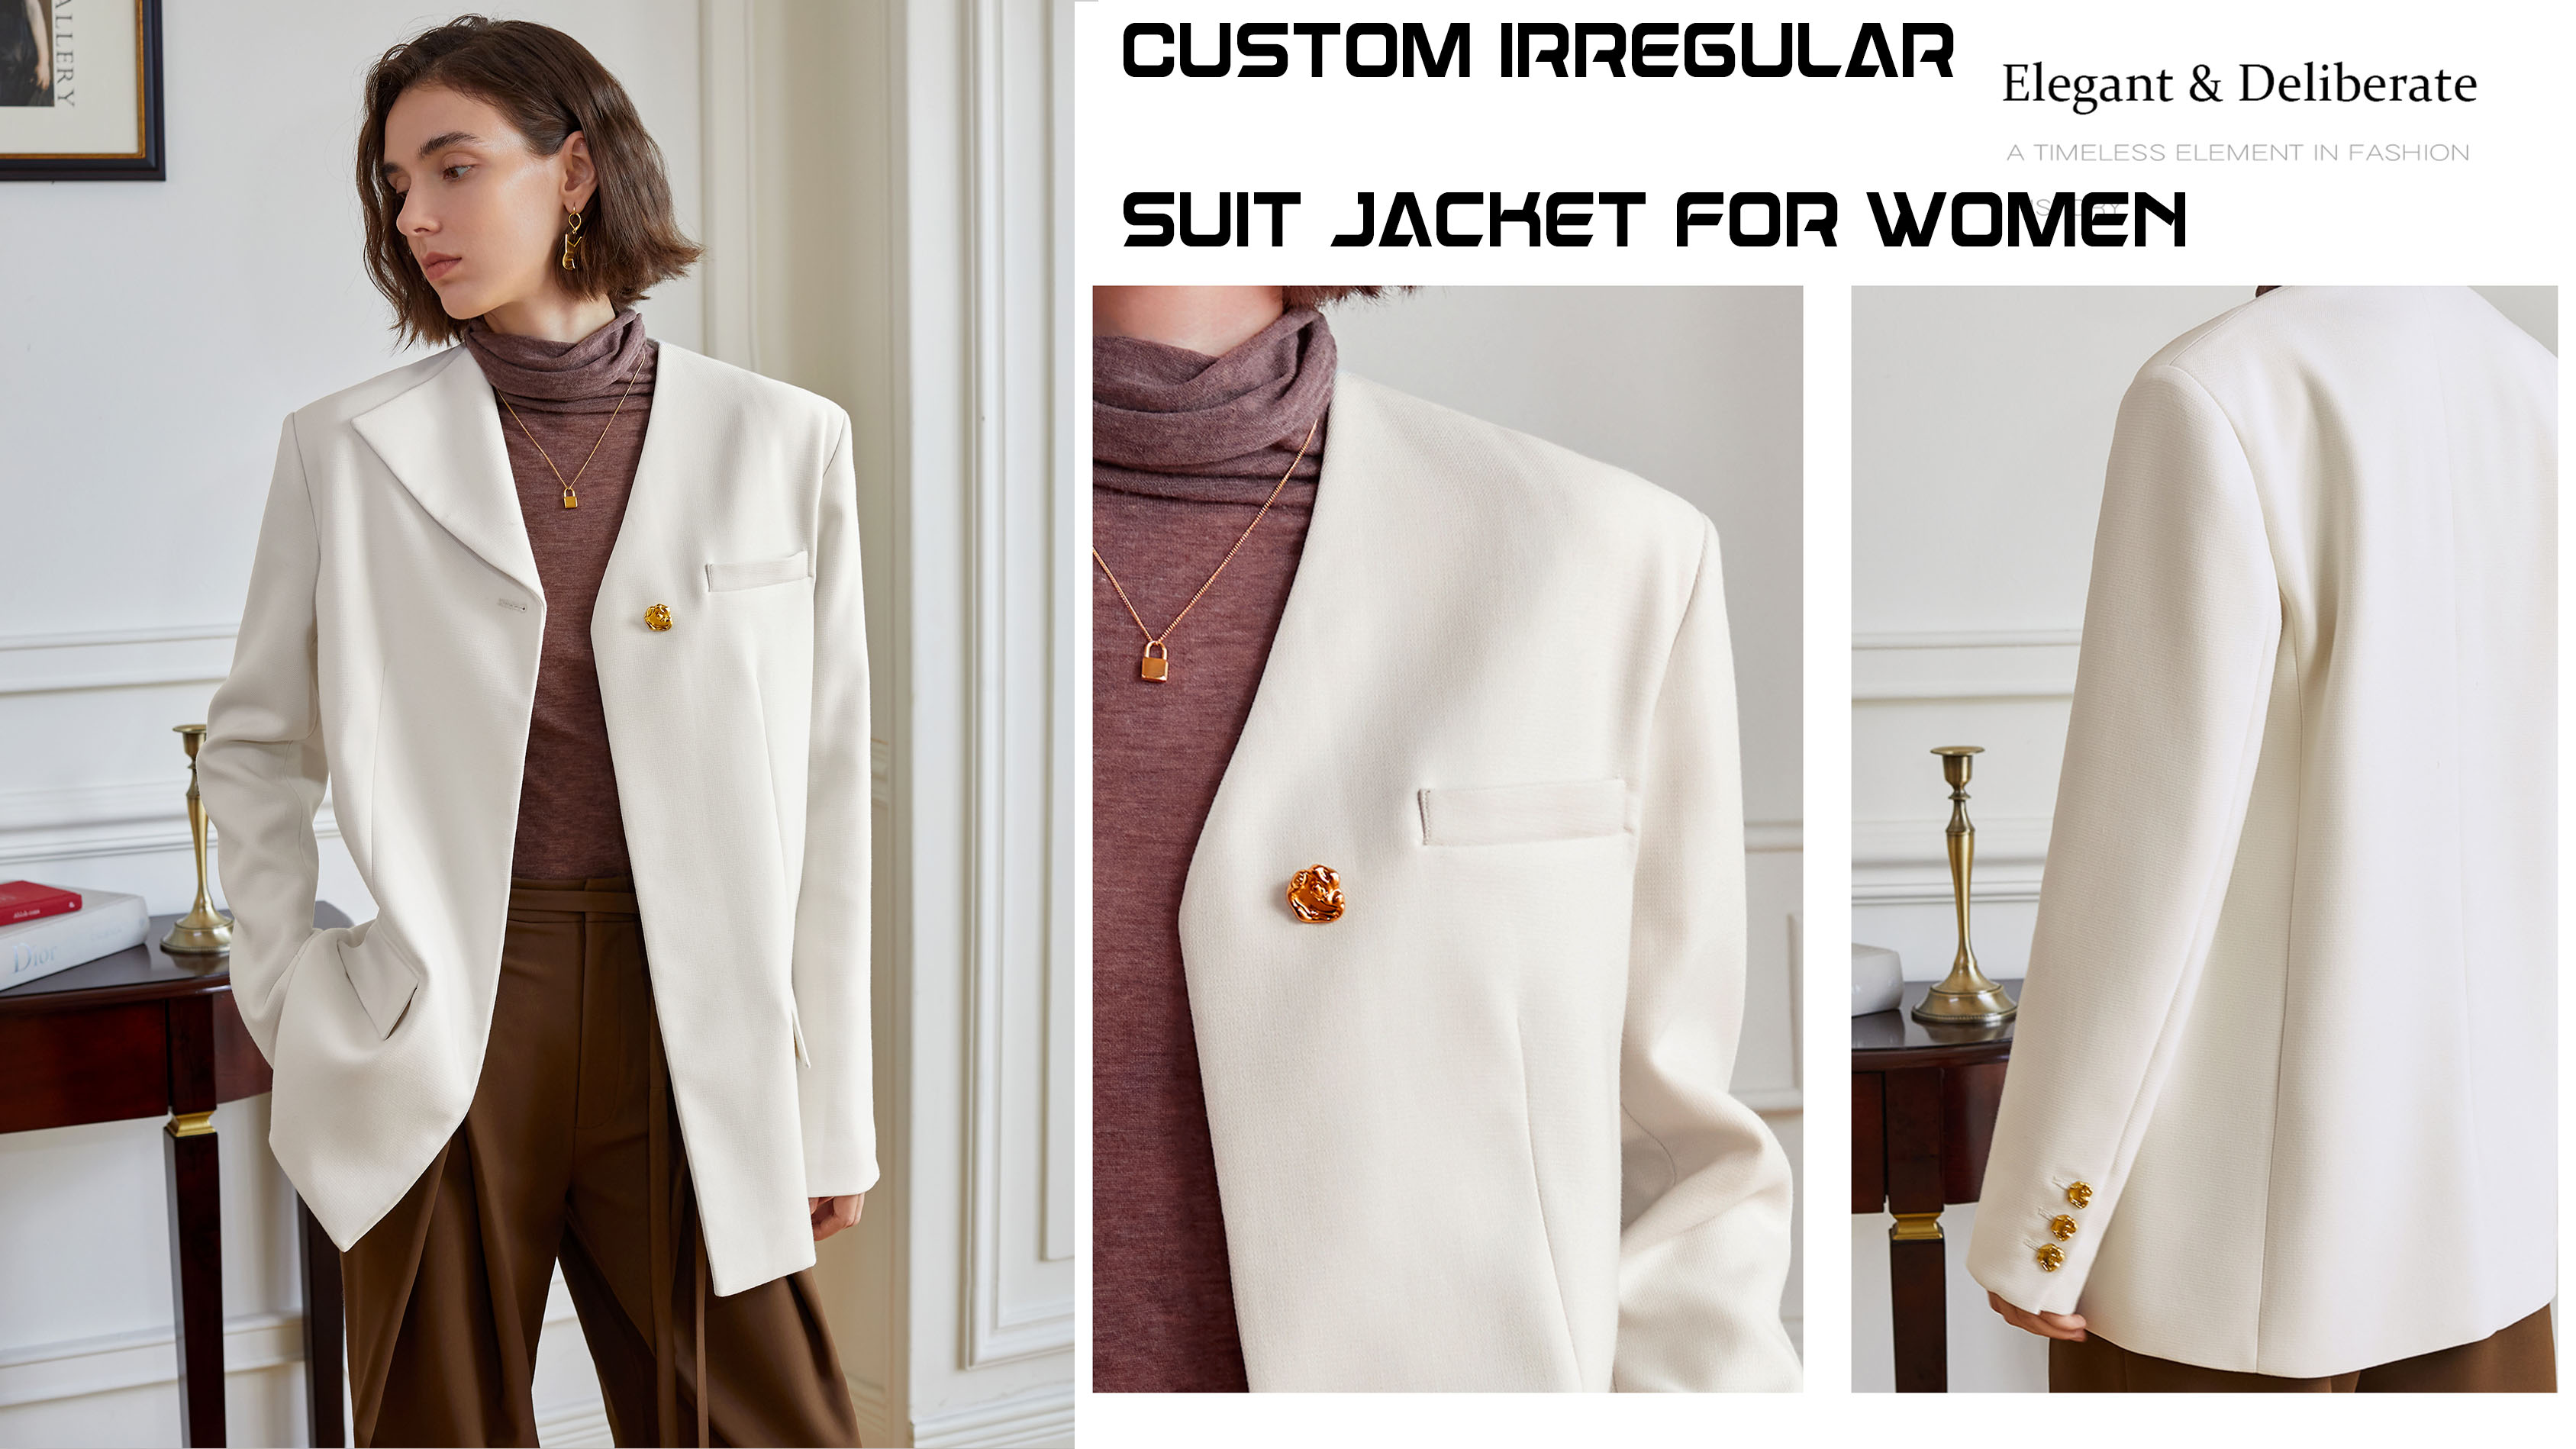 Custom irregular suit jacket for women